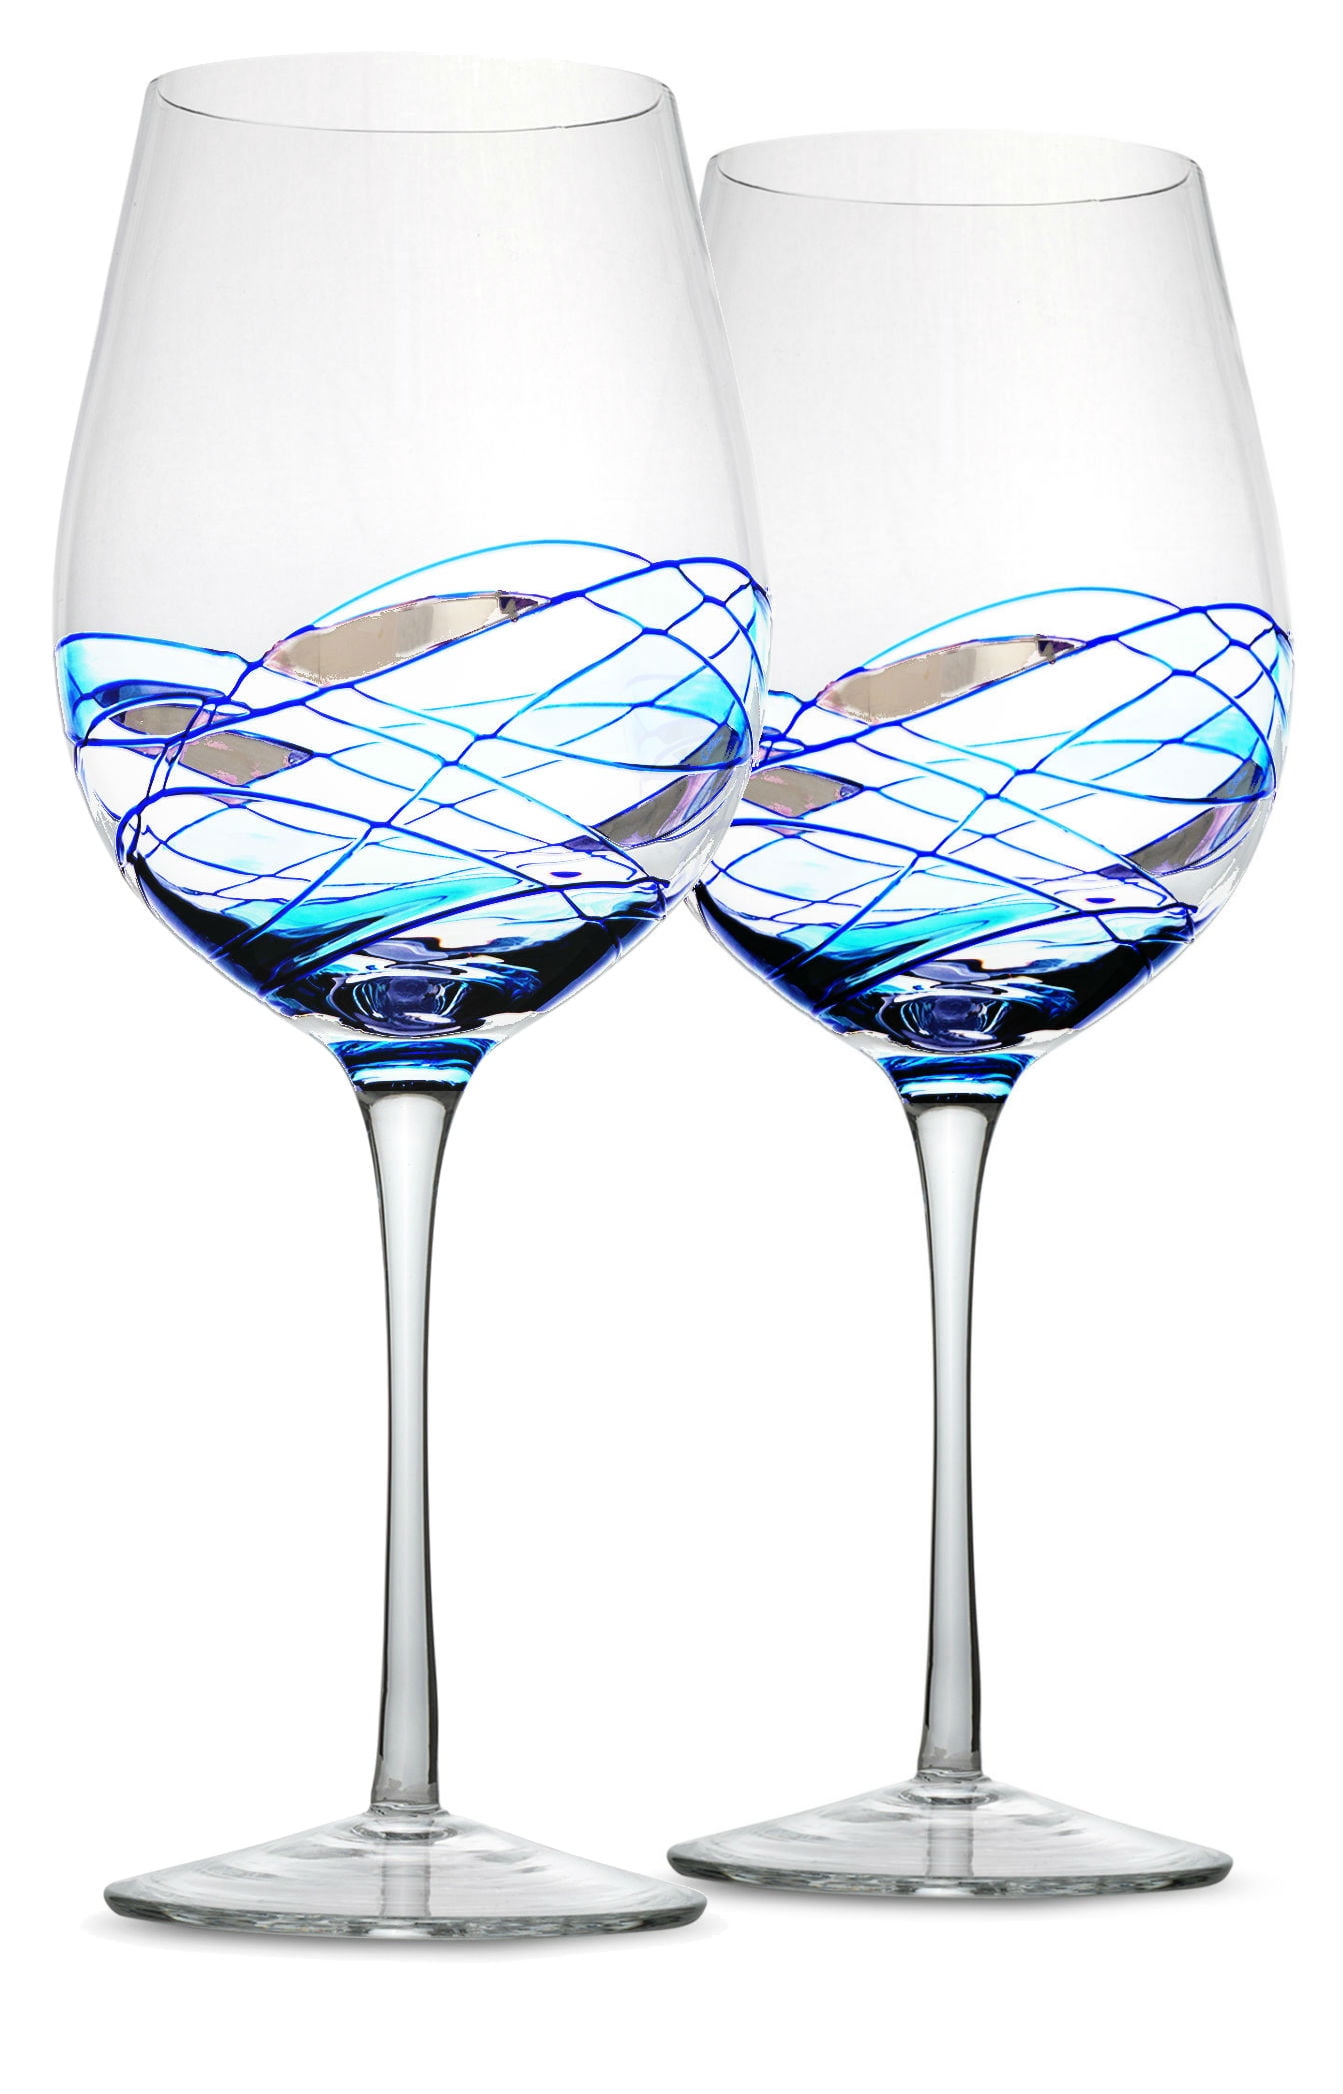  BENETI German Made Wine Glasses Set of 2